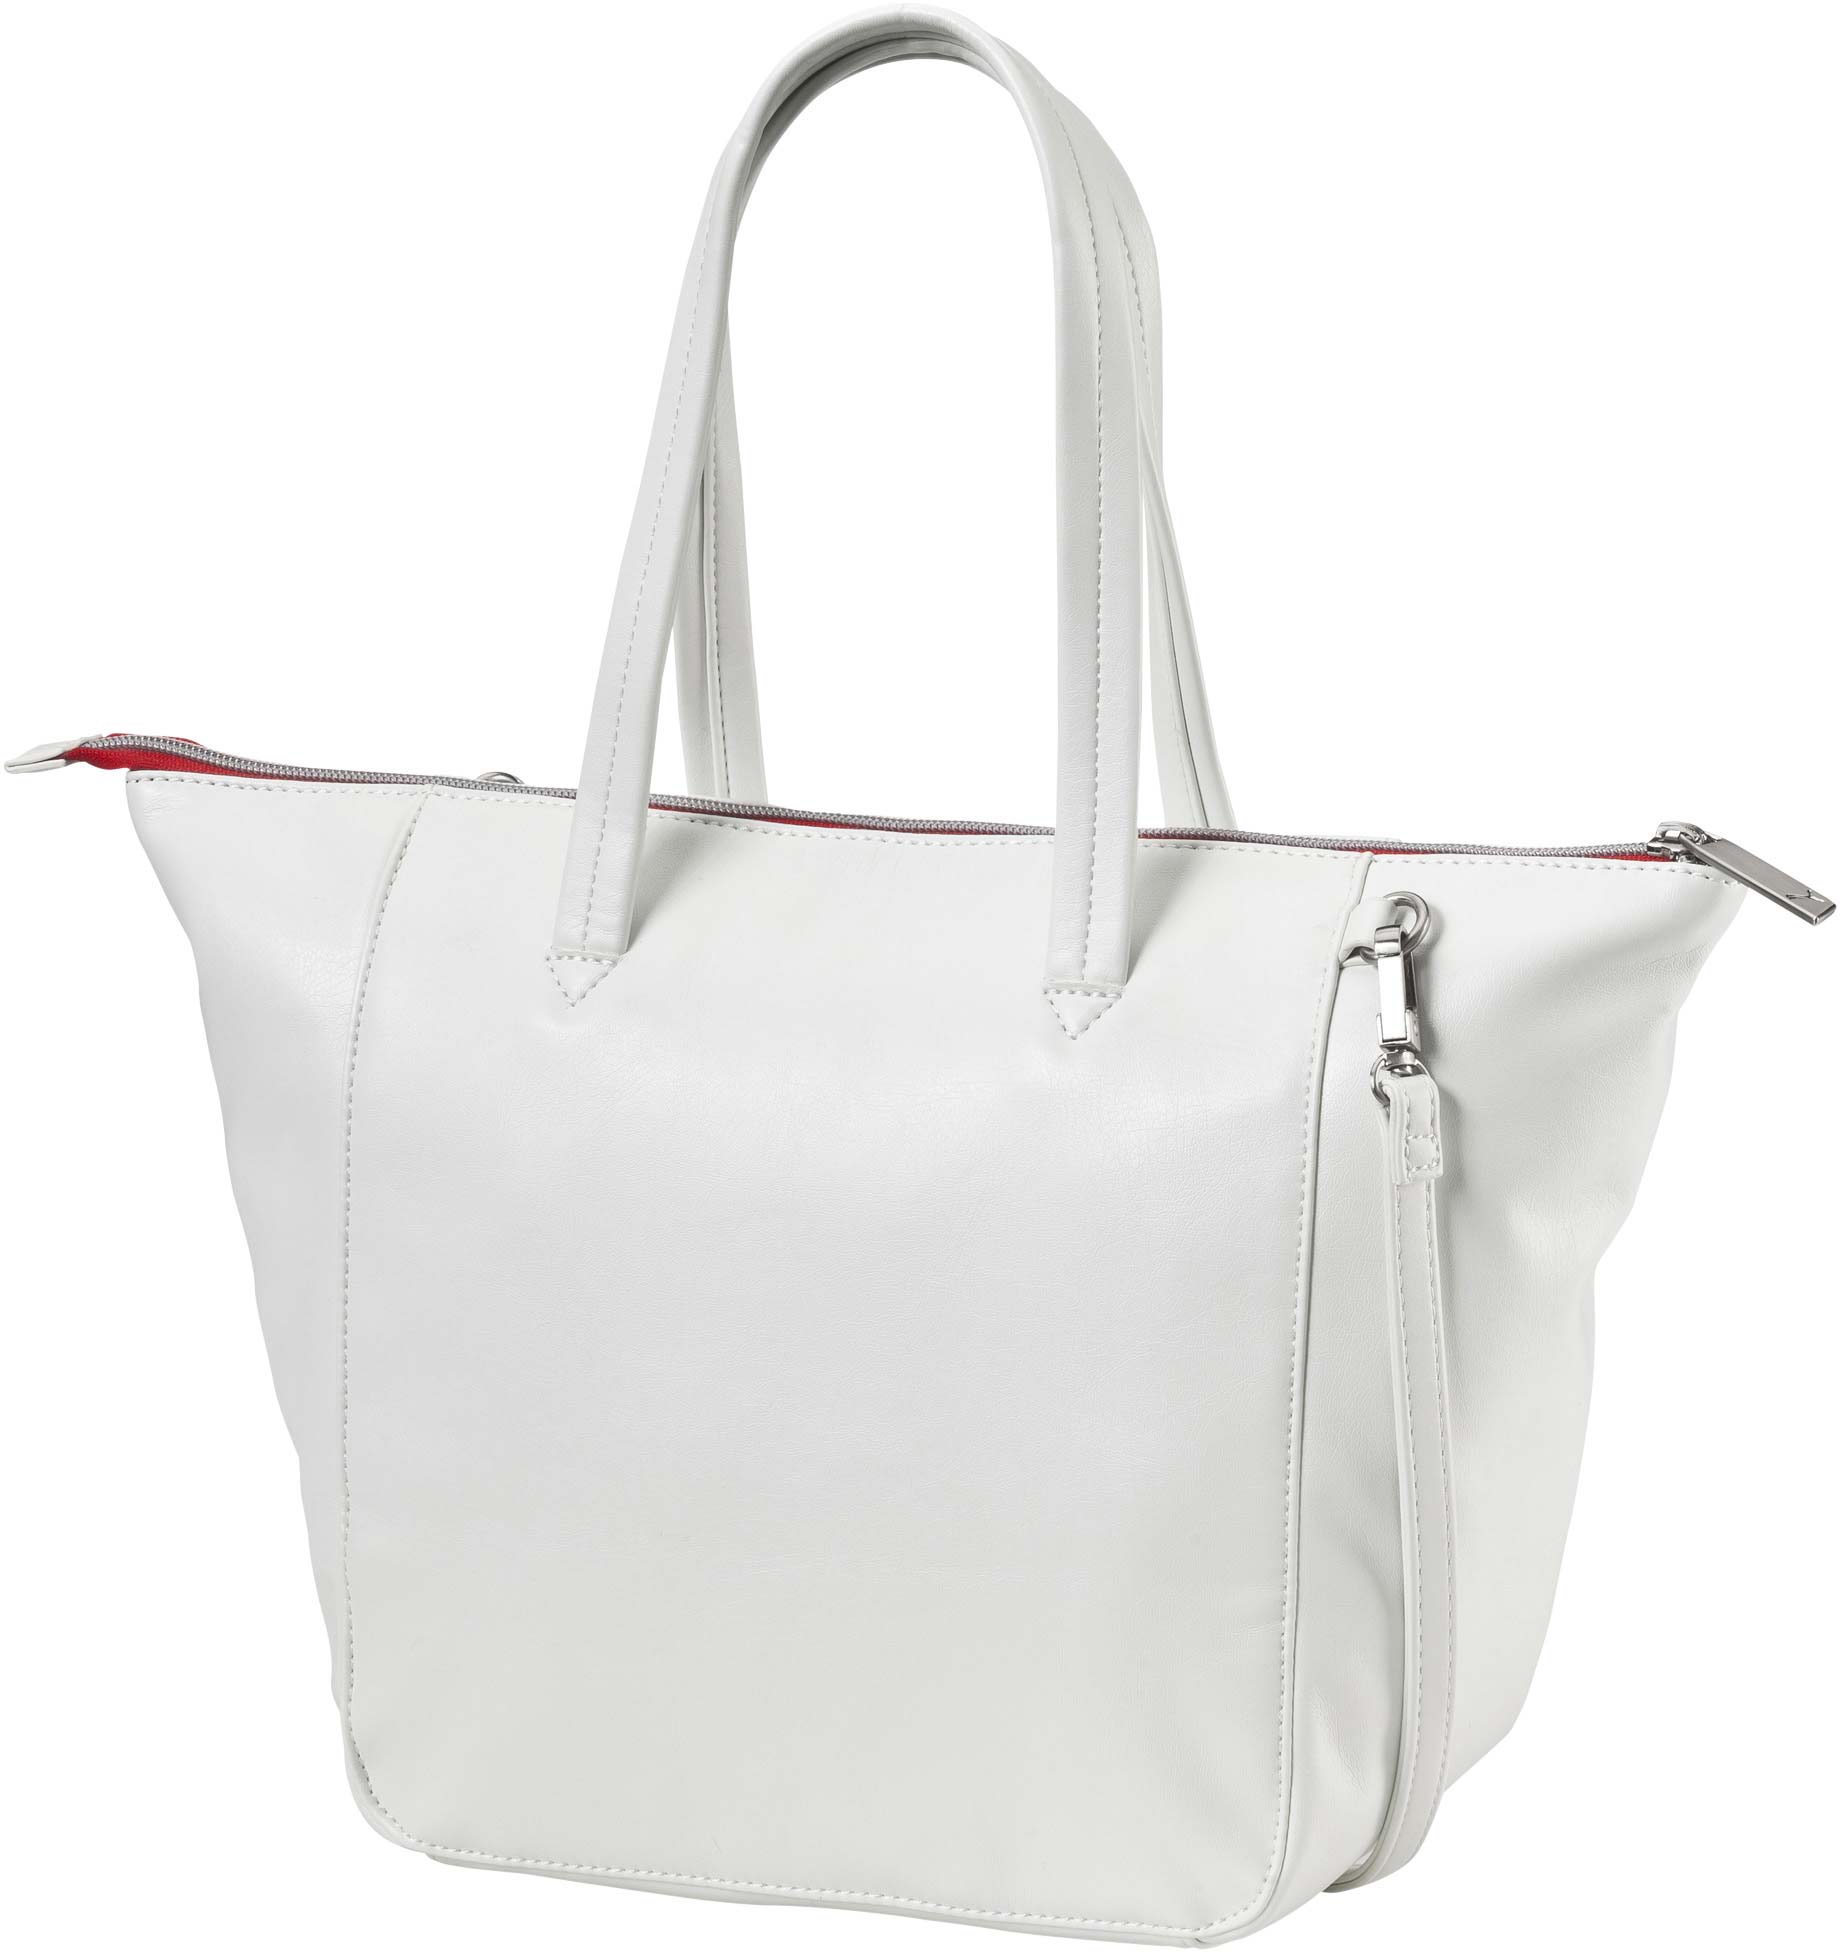 FERRARI LS HANDBAG - Women's Luxury Handbag